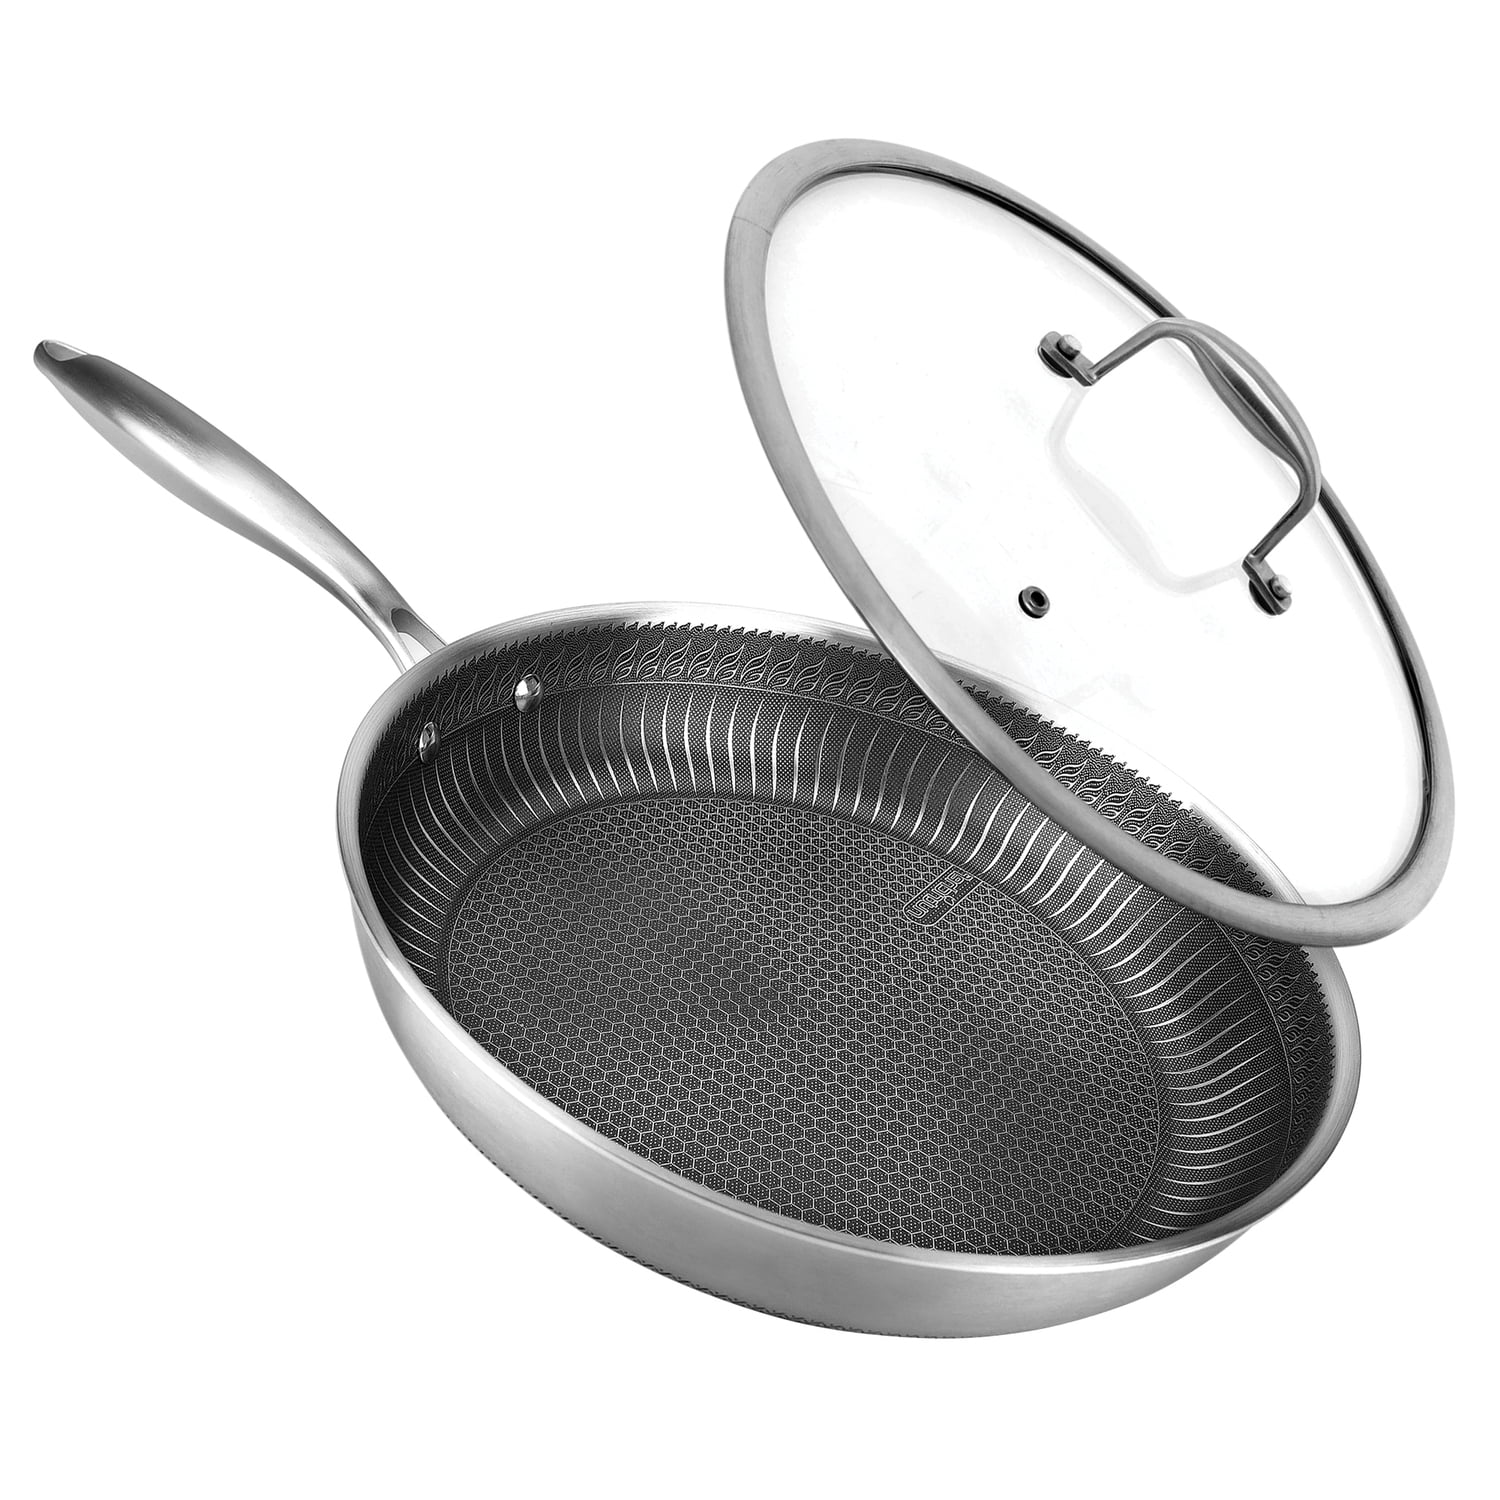 Nutrichef 12 Large Fry Pan - Large Skillet Nonstick Frying Pan